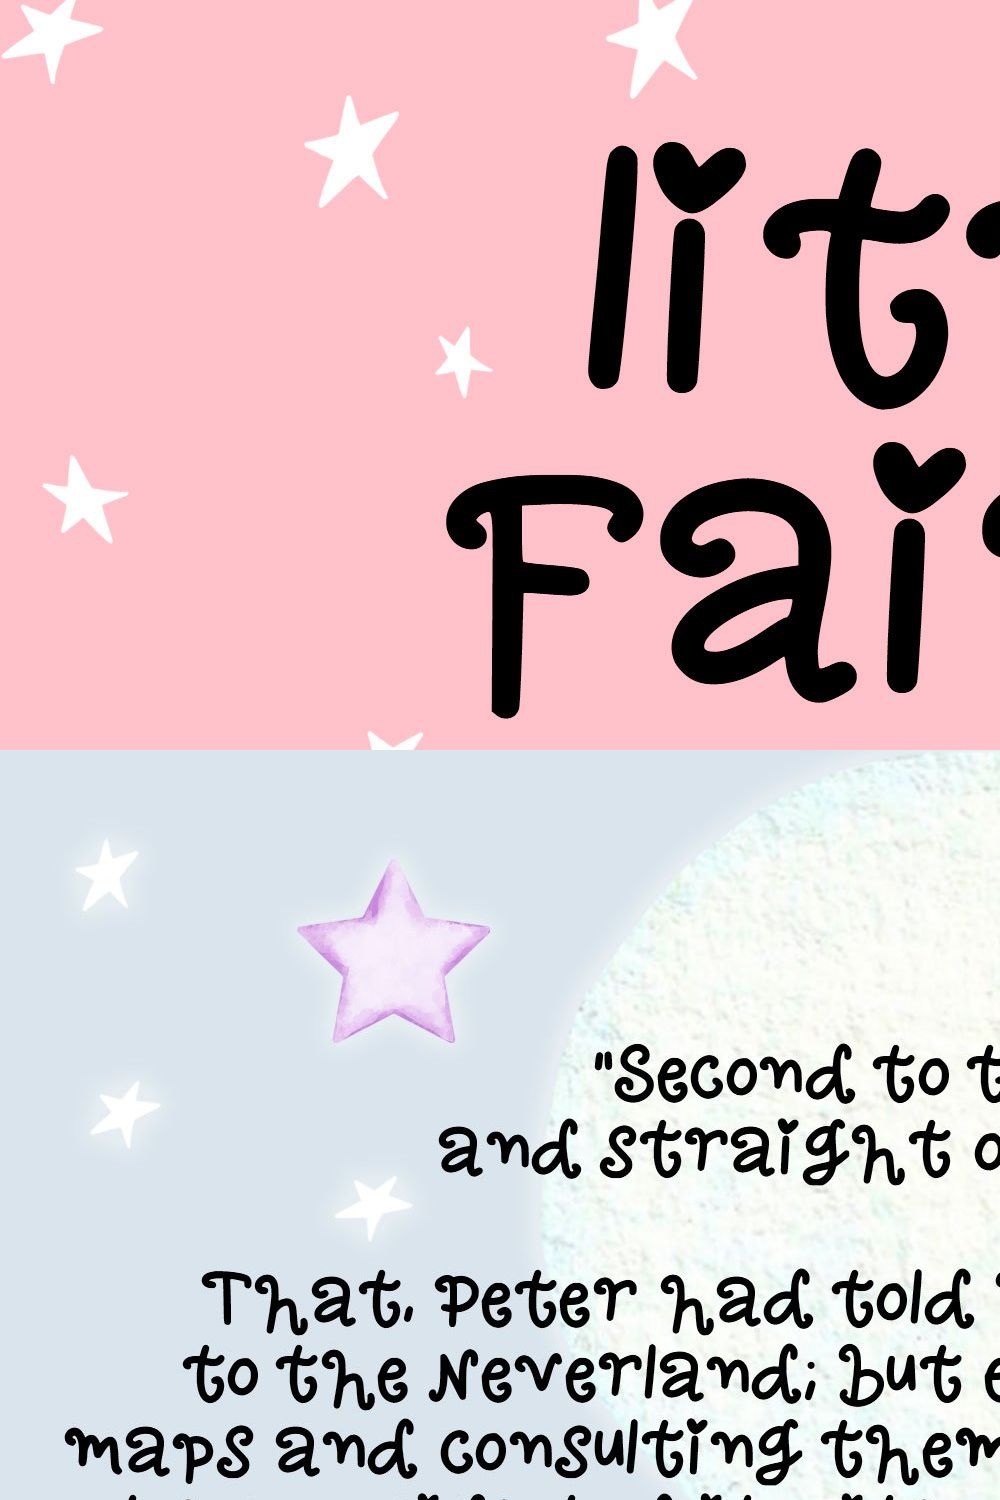 Little Fairy cakes font pinterest preview image.